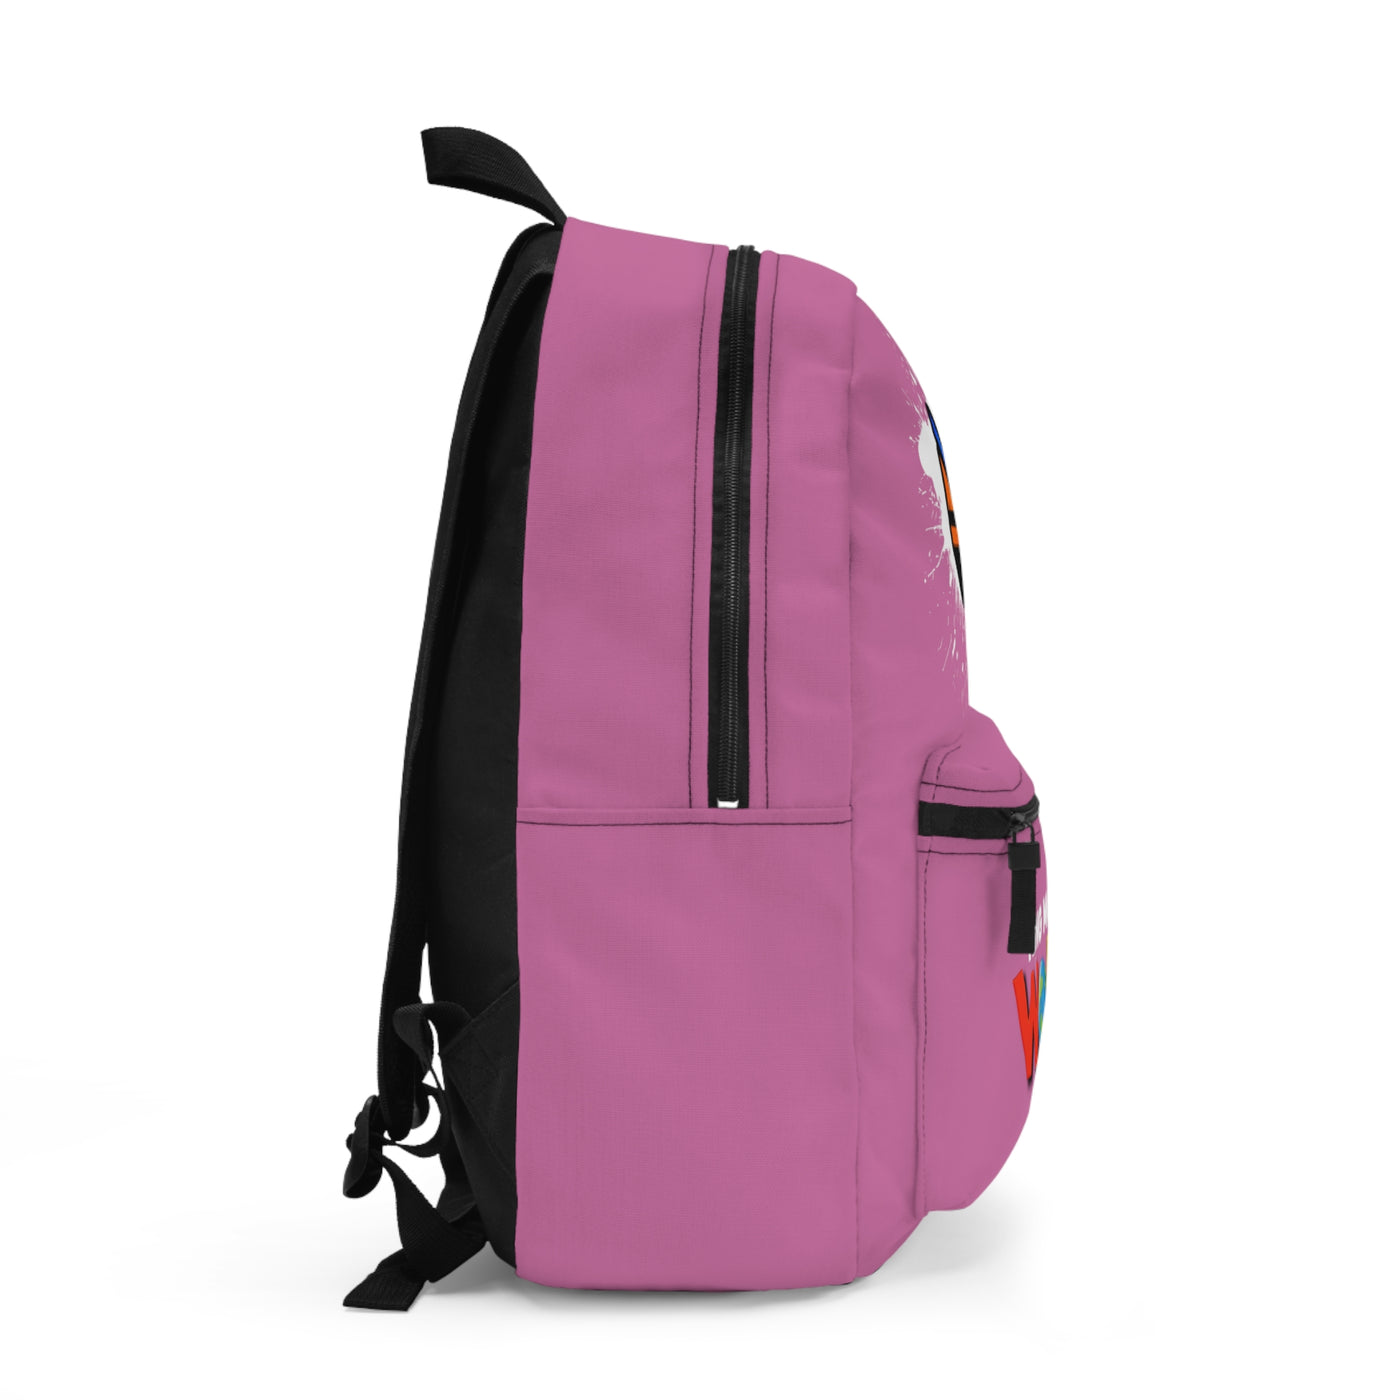 King Moore World Backpack (Light Pink)